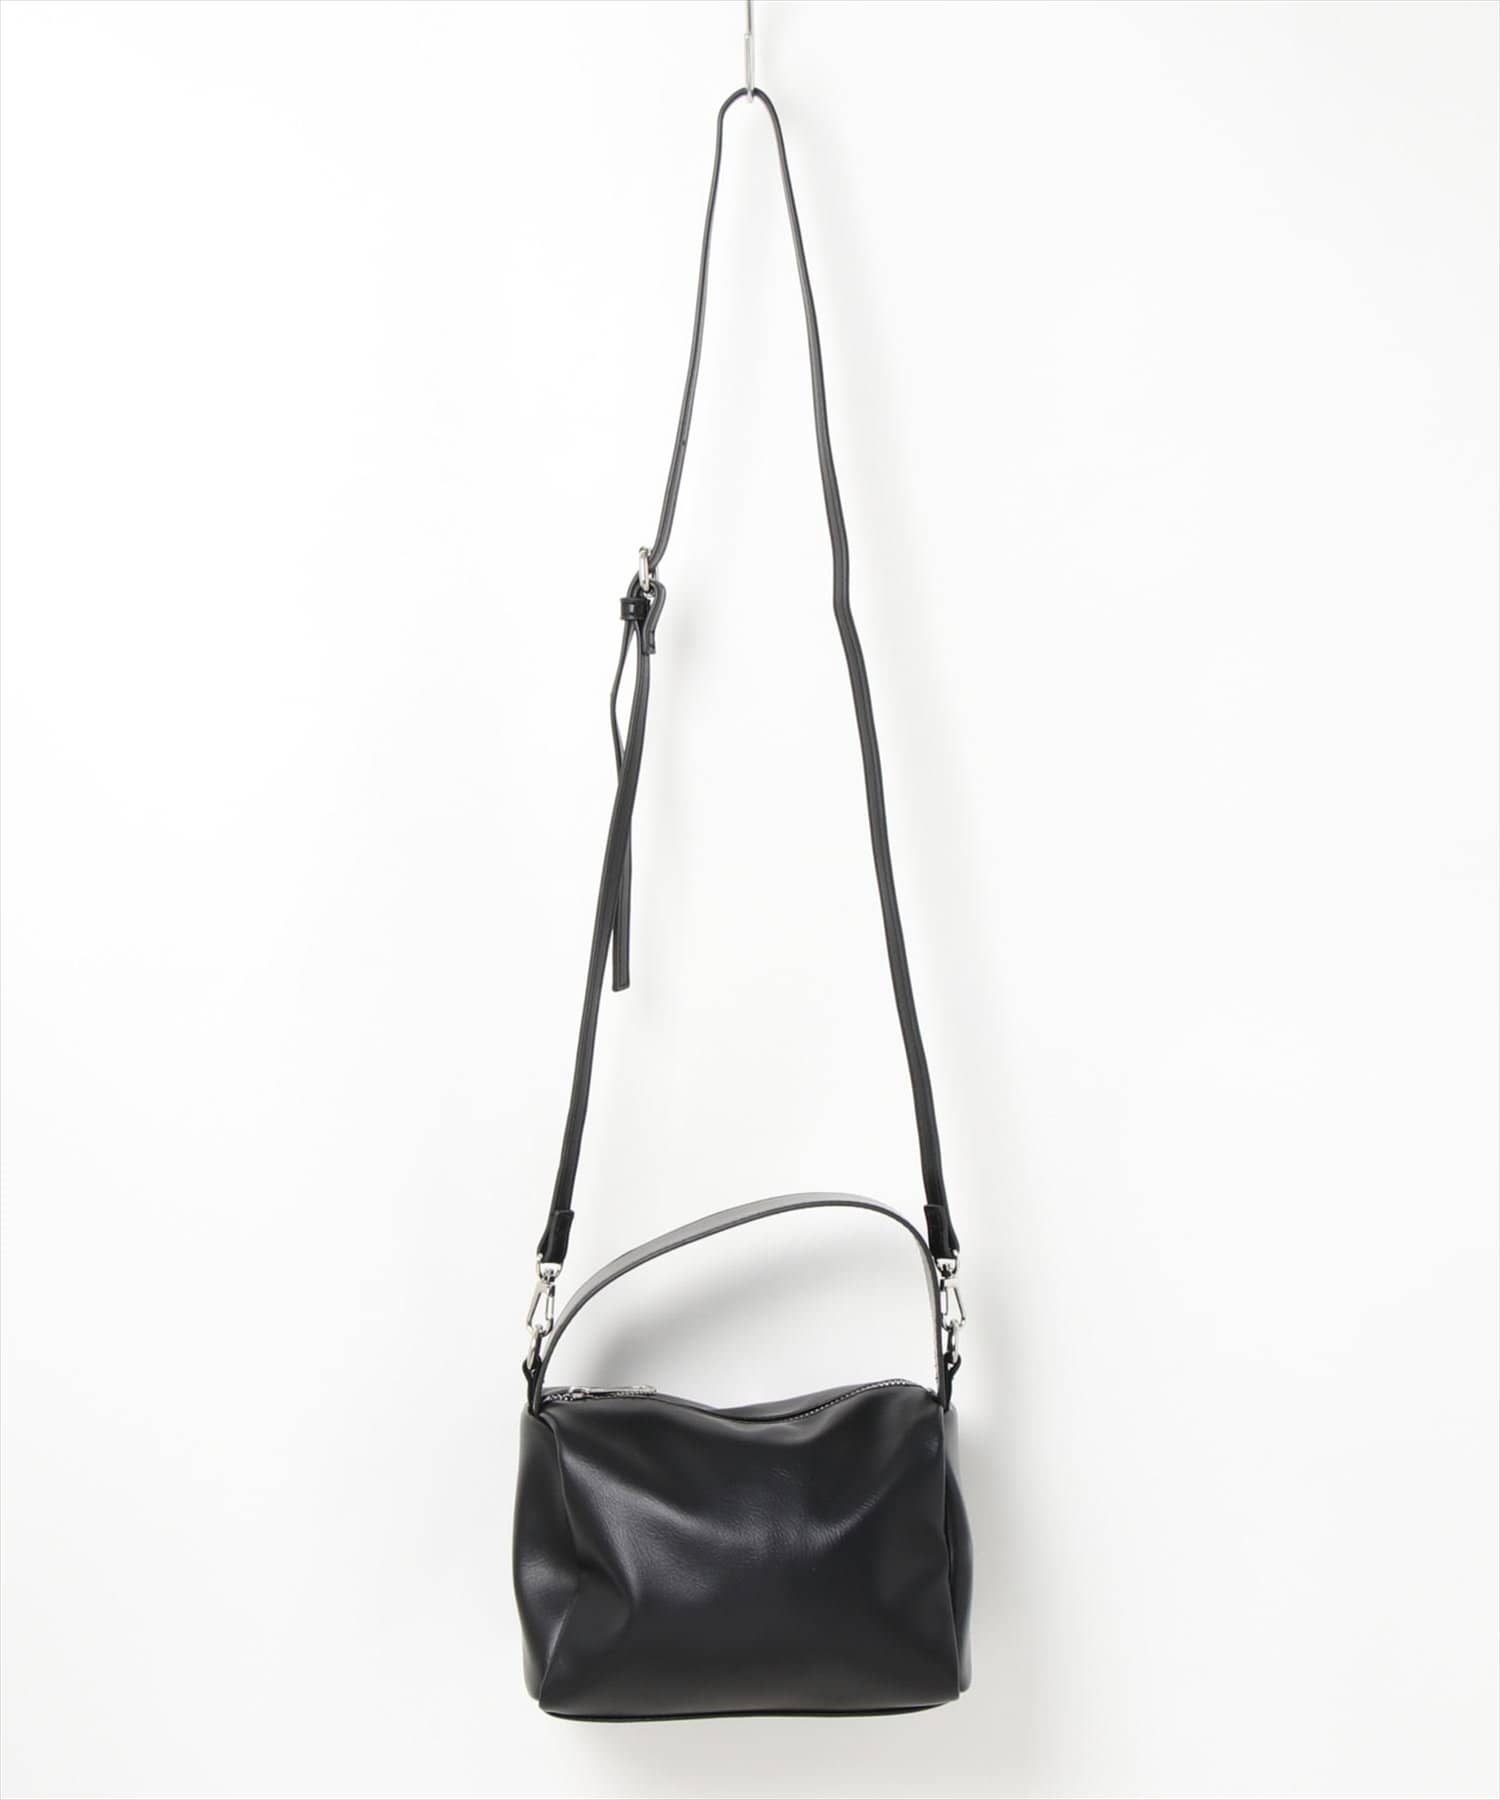 natural couture(ナチュラルクチュール) カラフルポーチ型バッグ